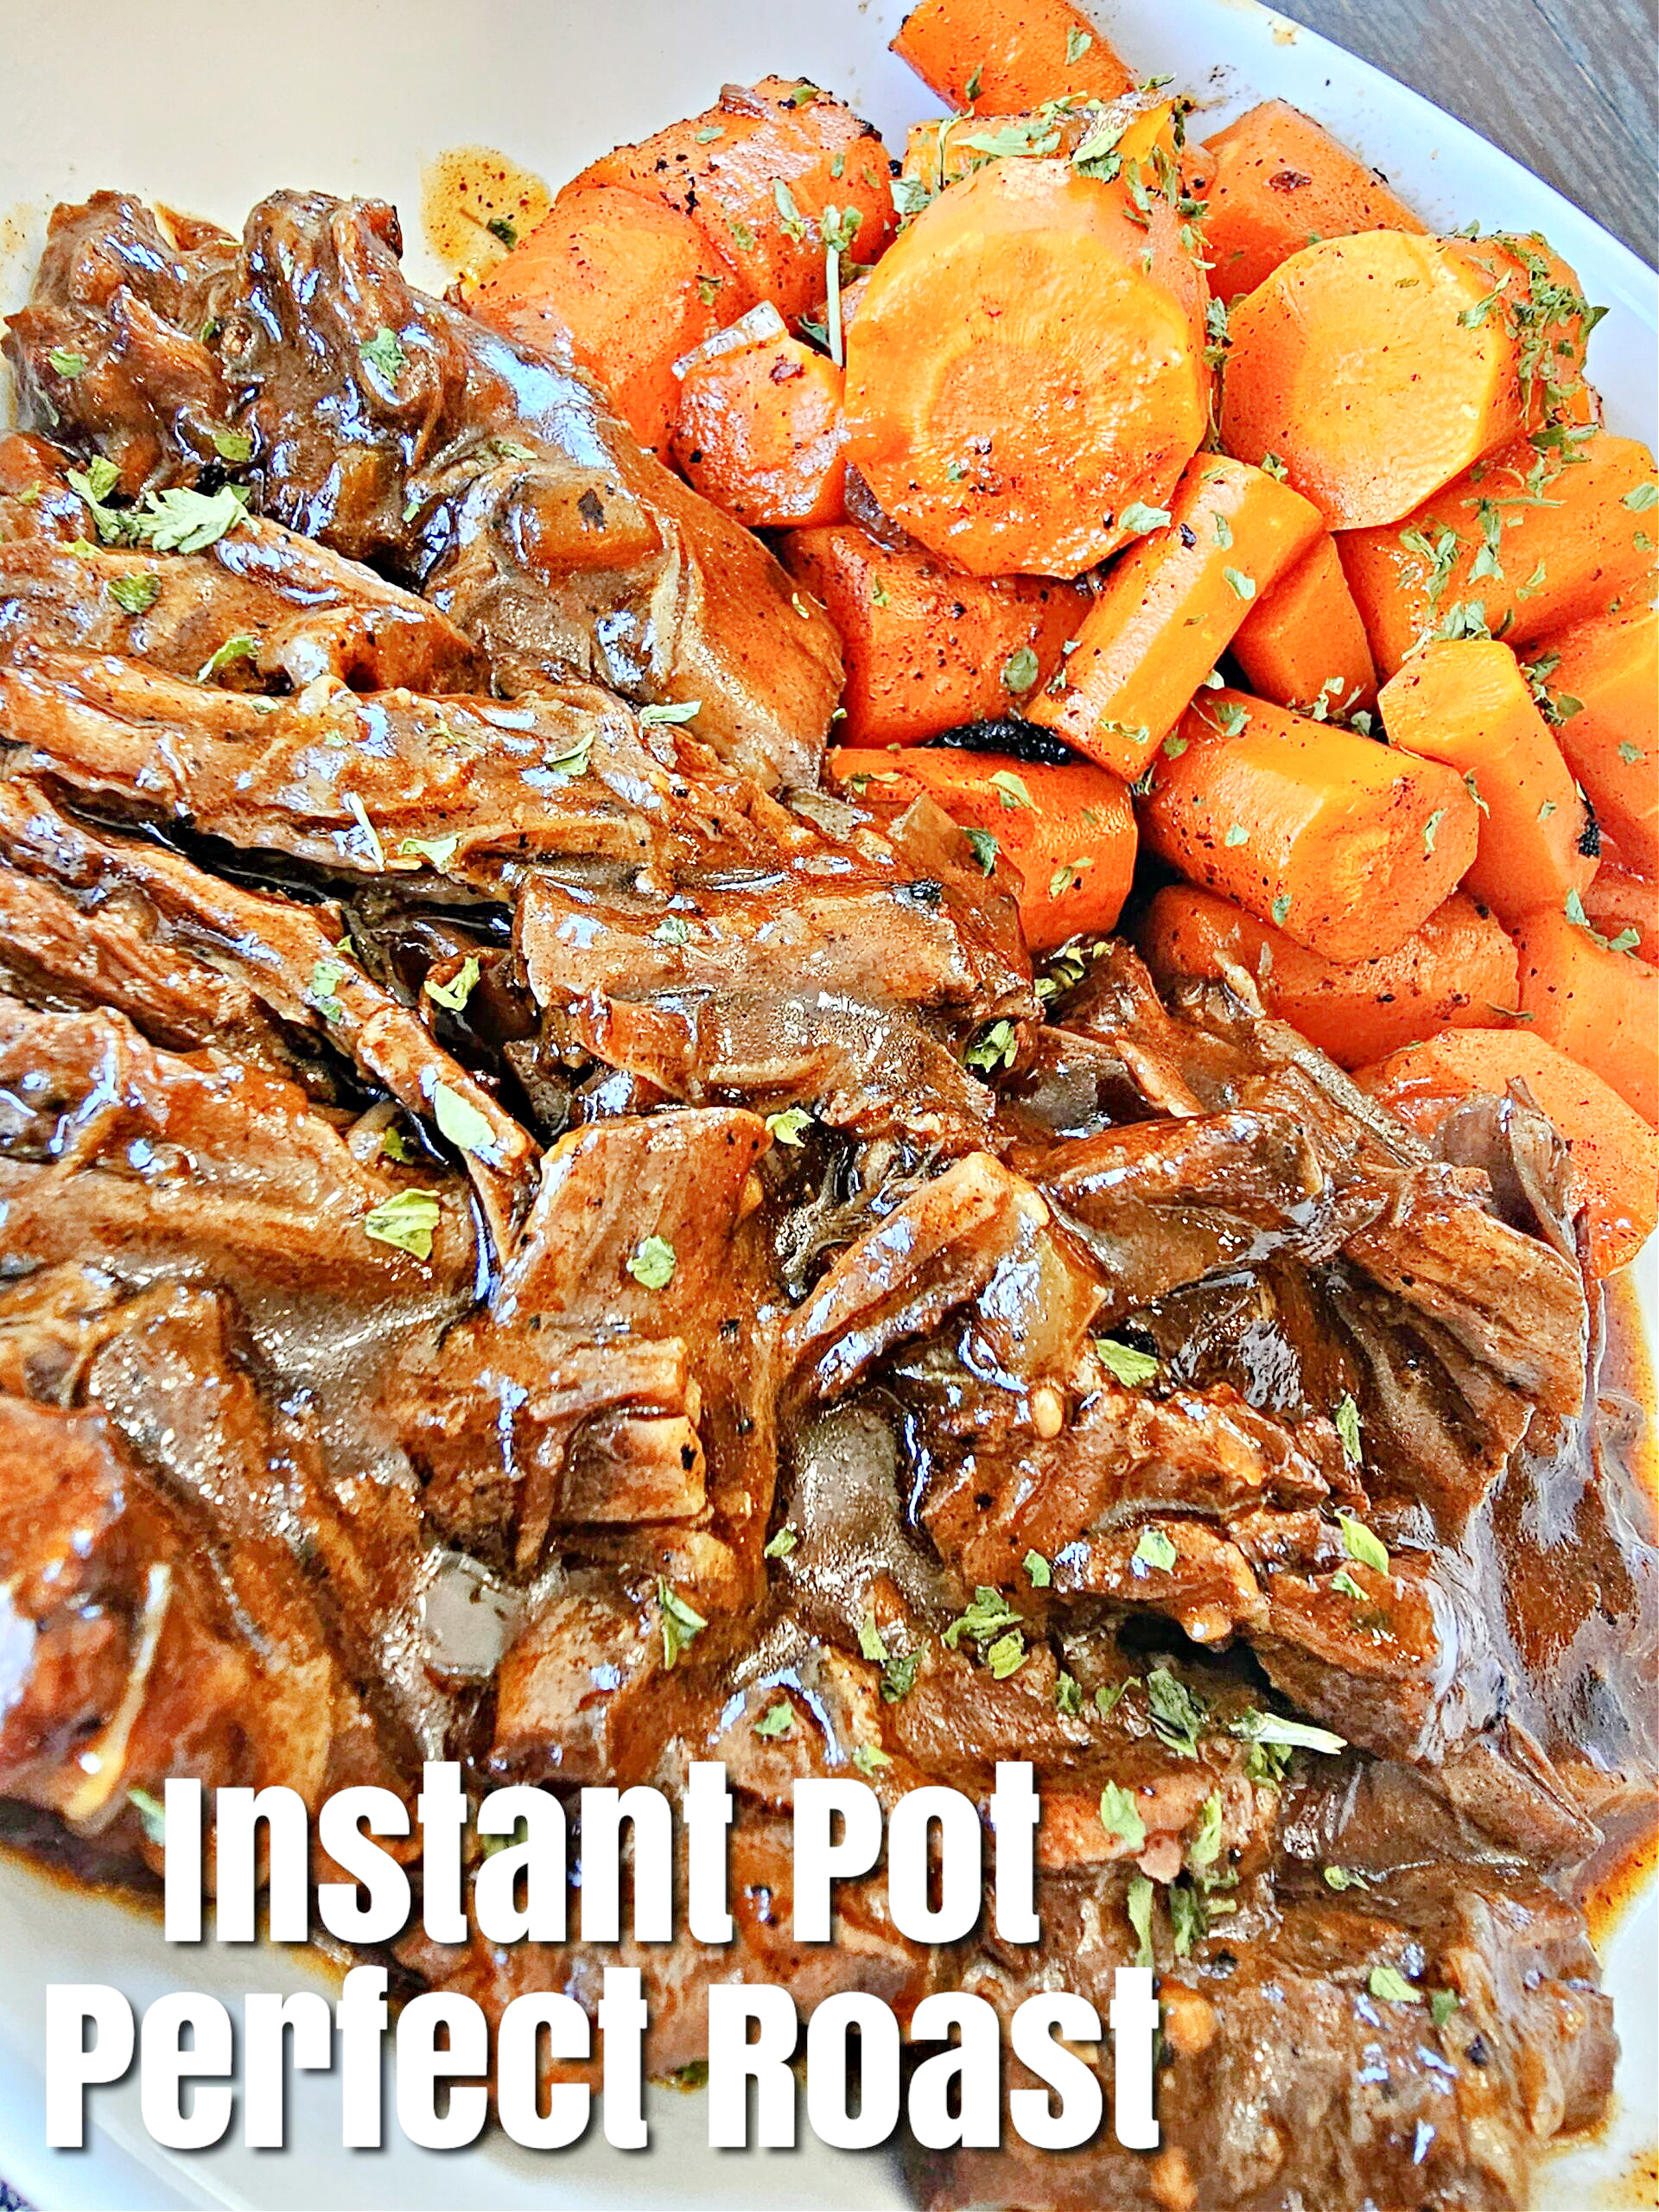 Instant Pot Perfect Roast #roast #instantpot #onepanmeals #beefrecipe #dinnerecipe #familydinner